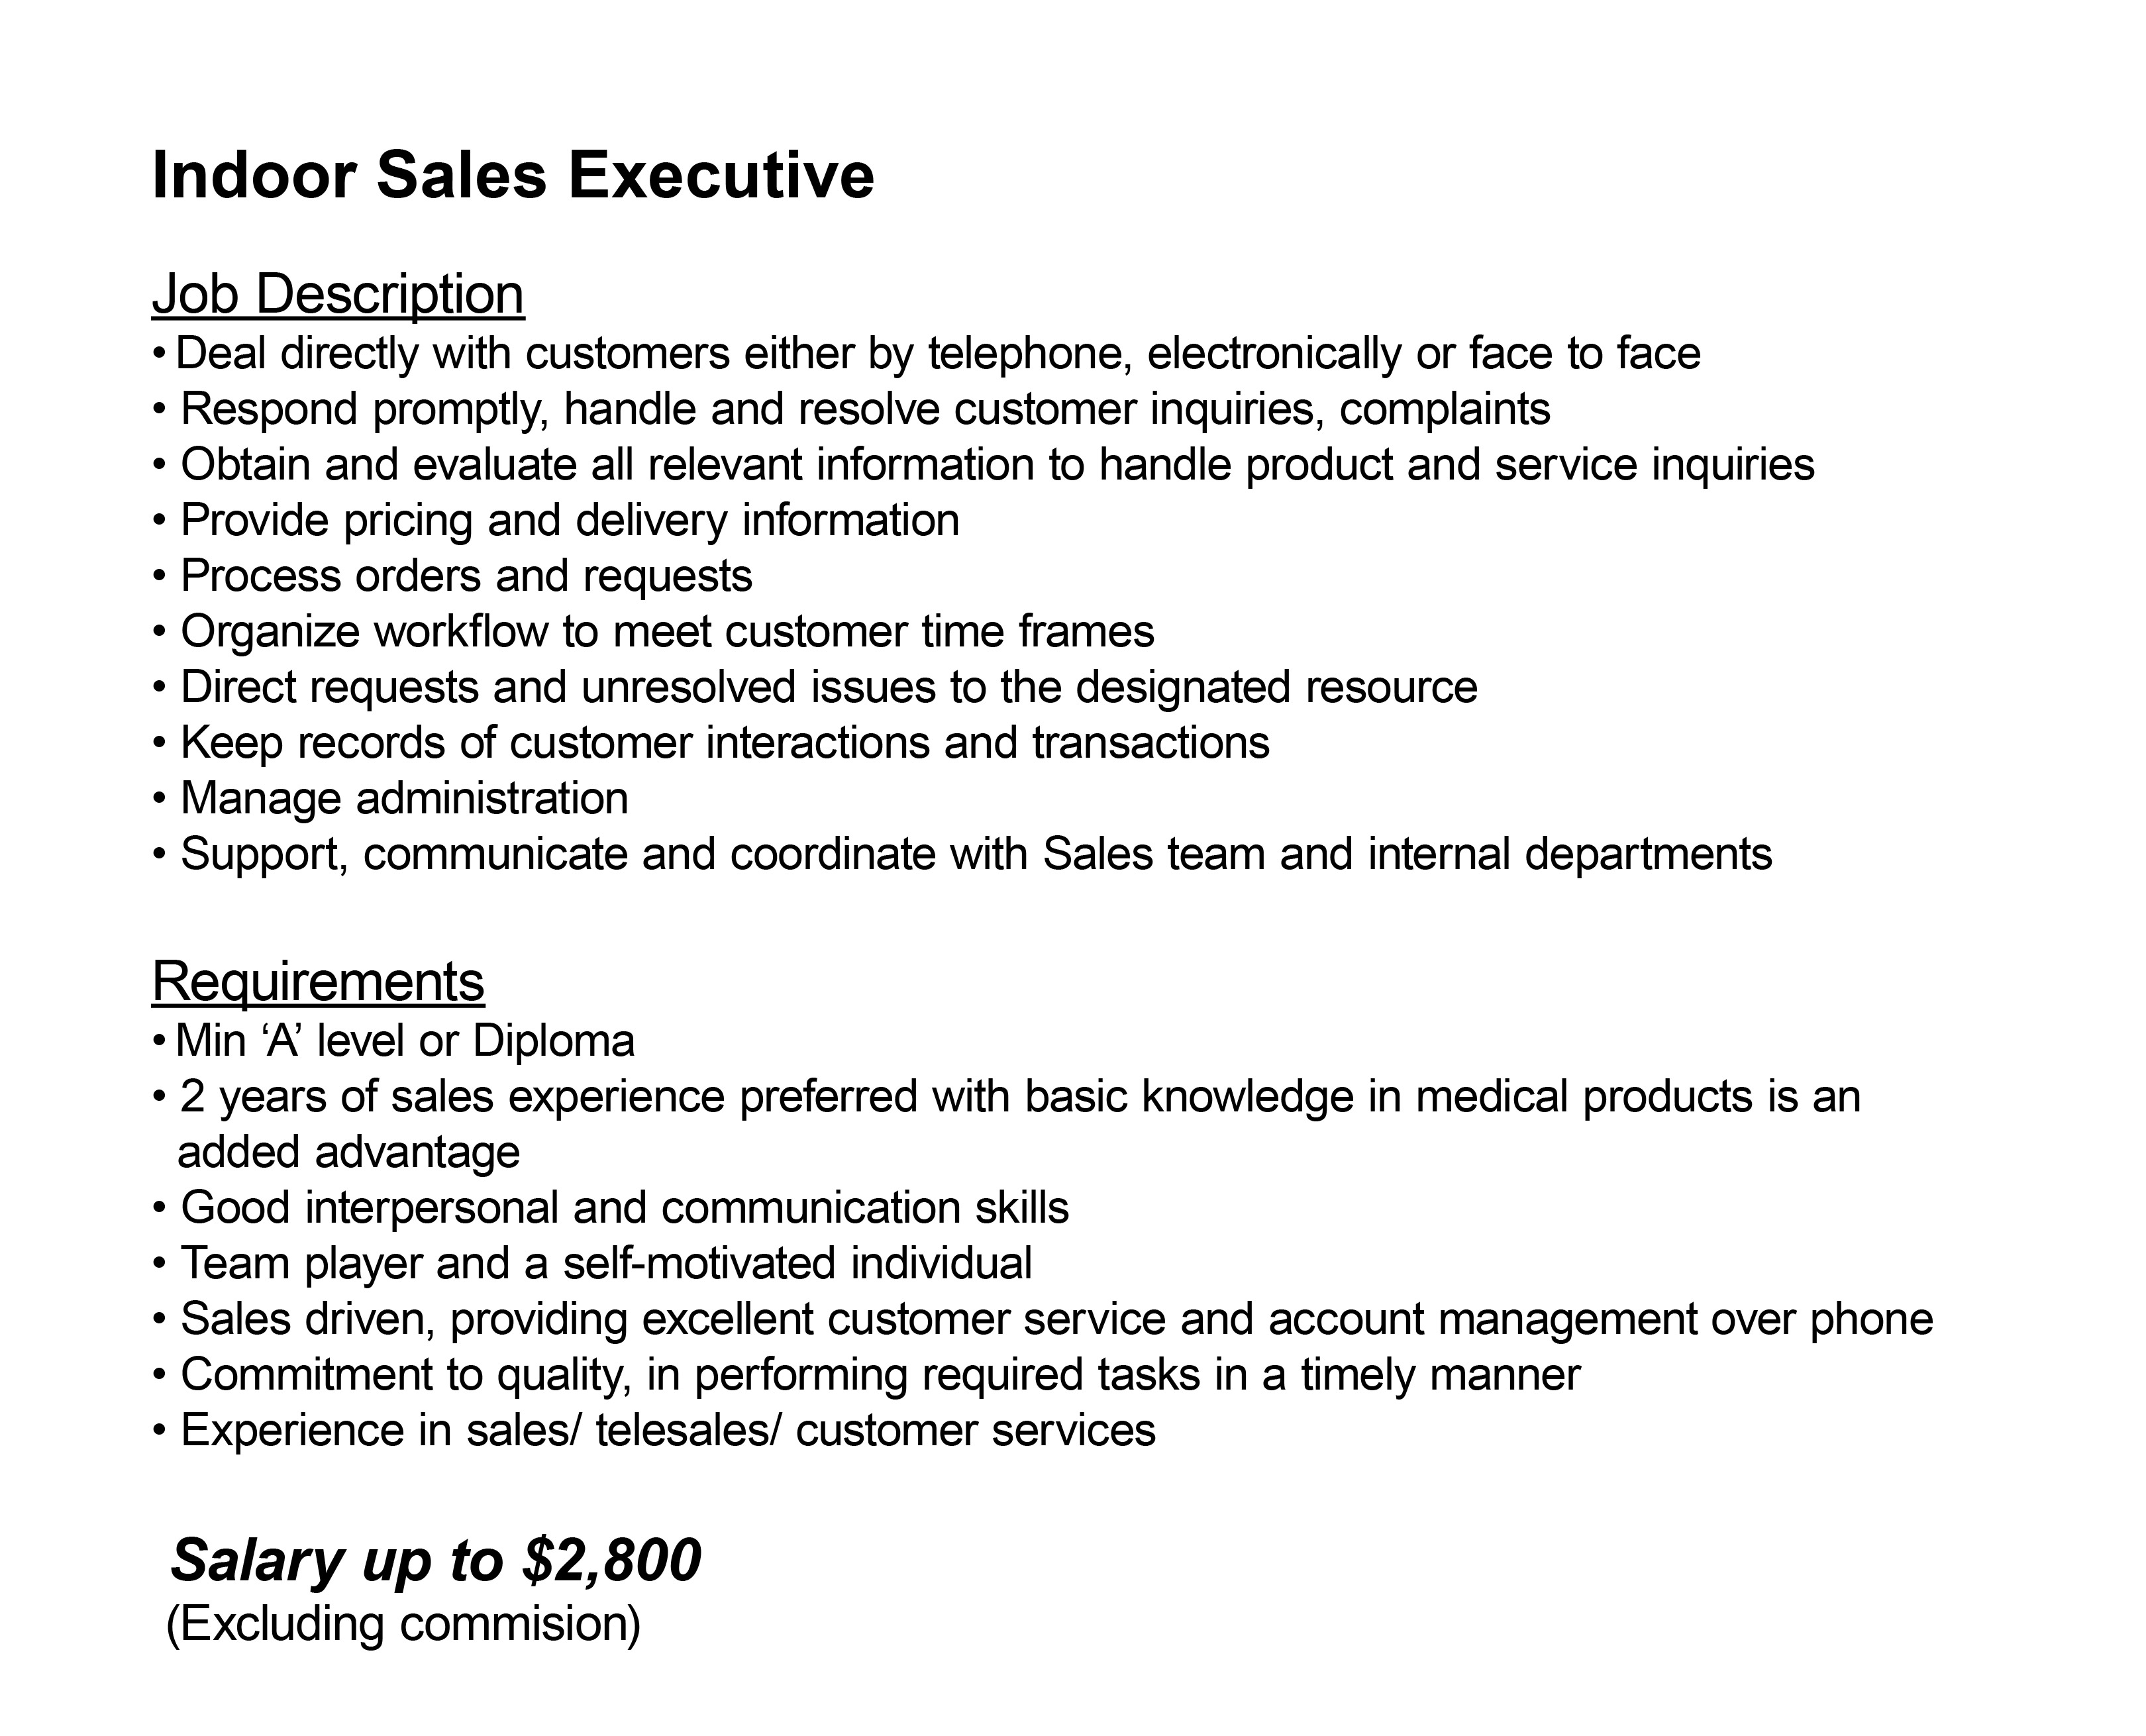 Recruitments_YMS_Indoor Sales Executive